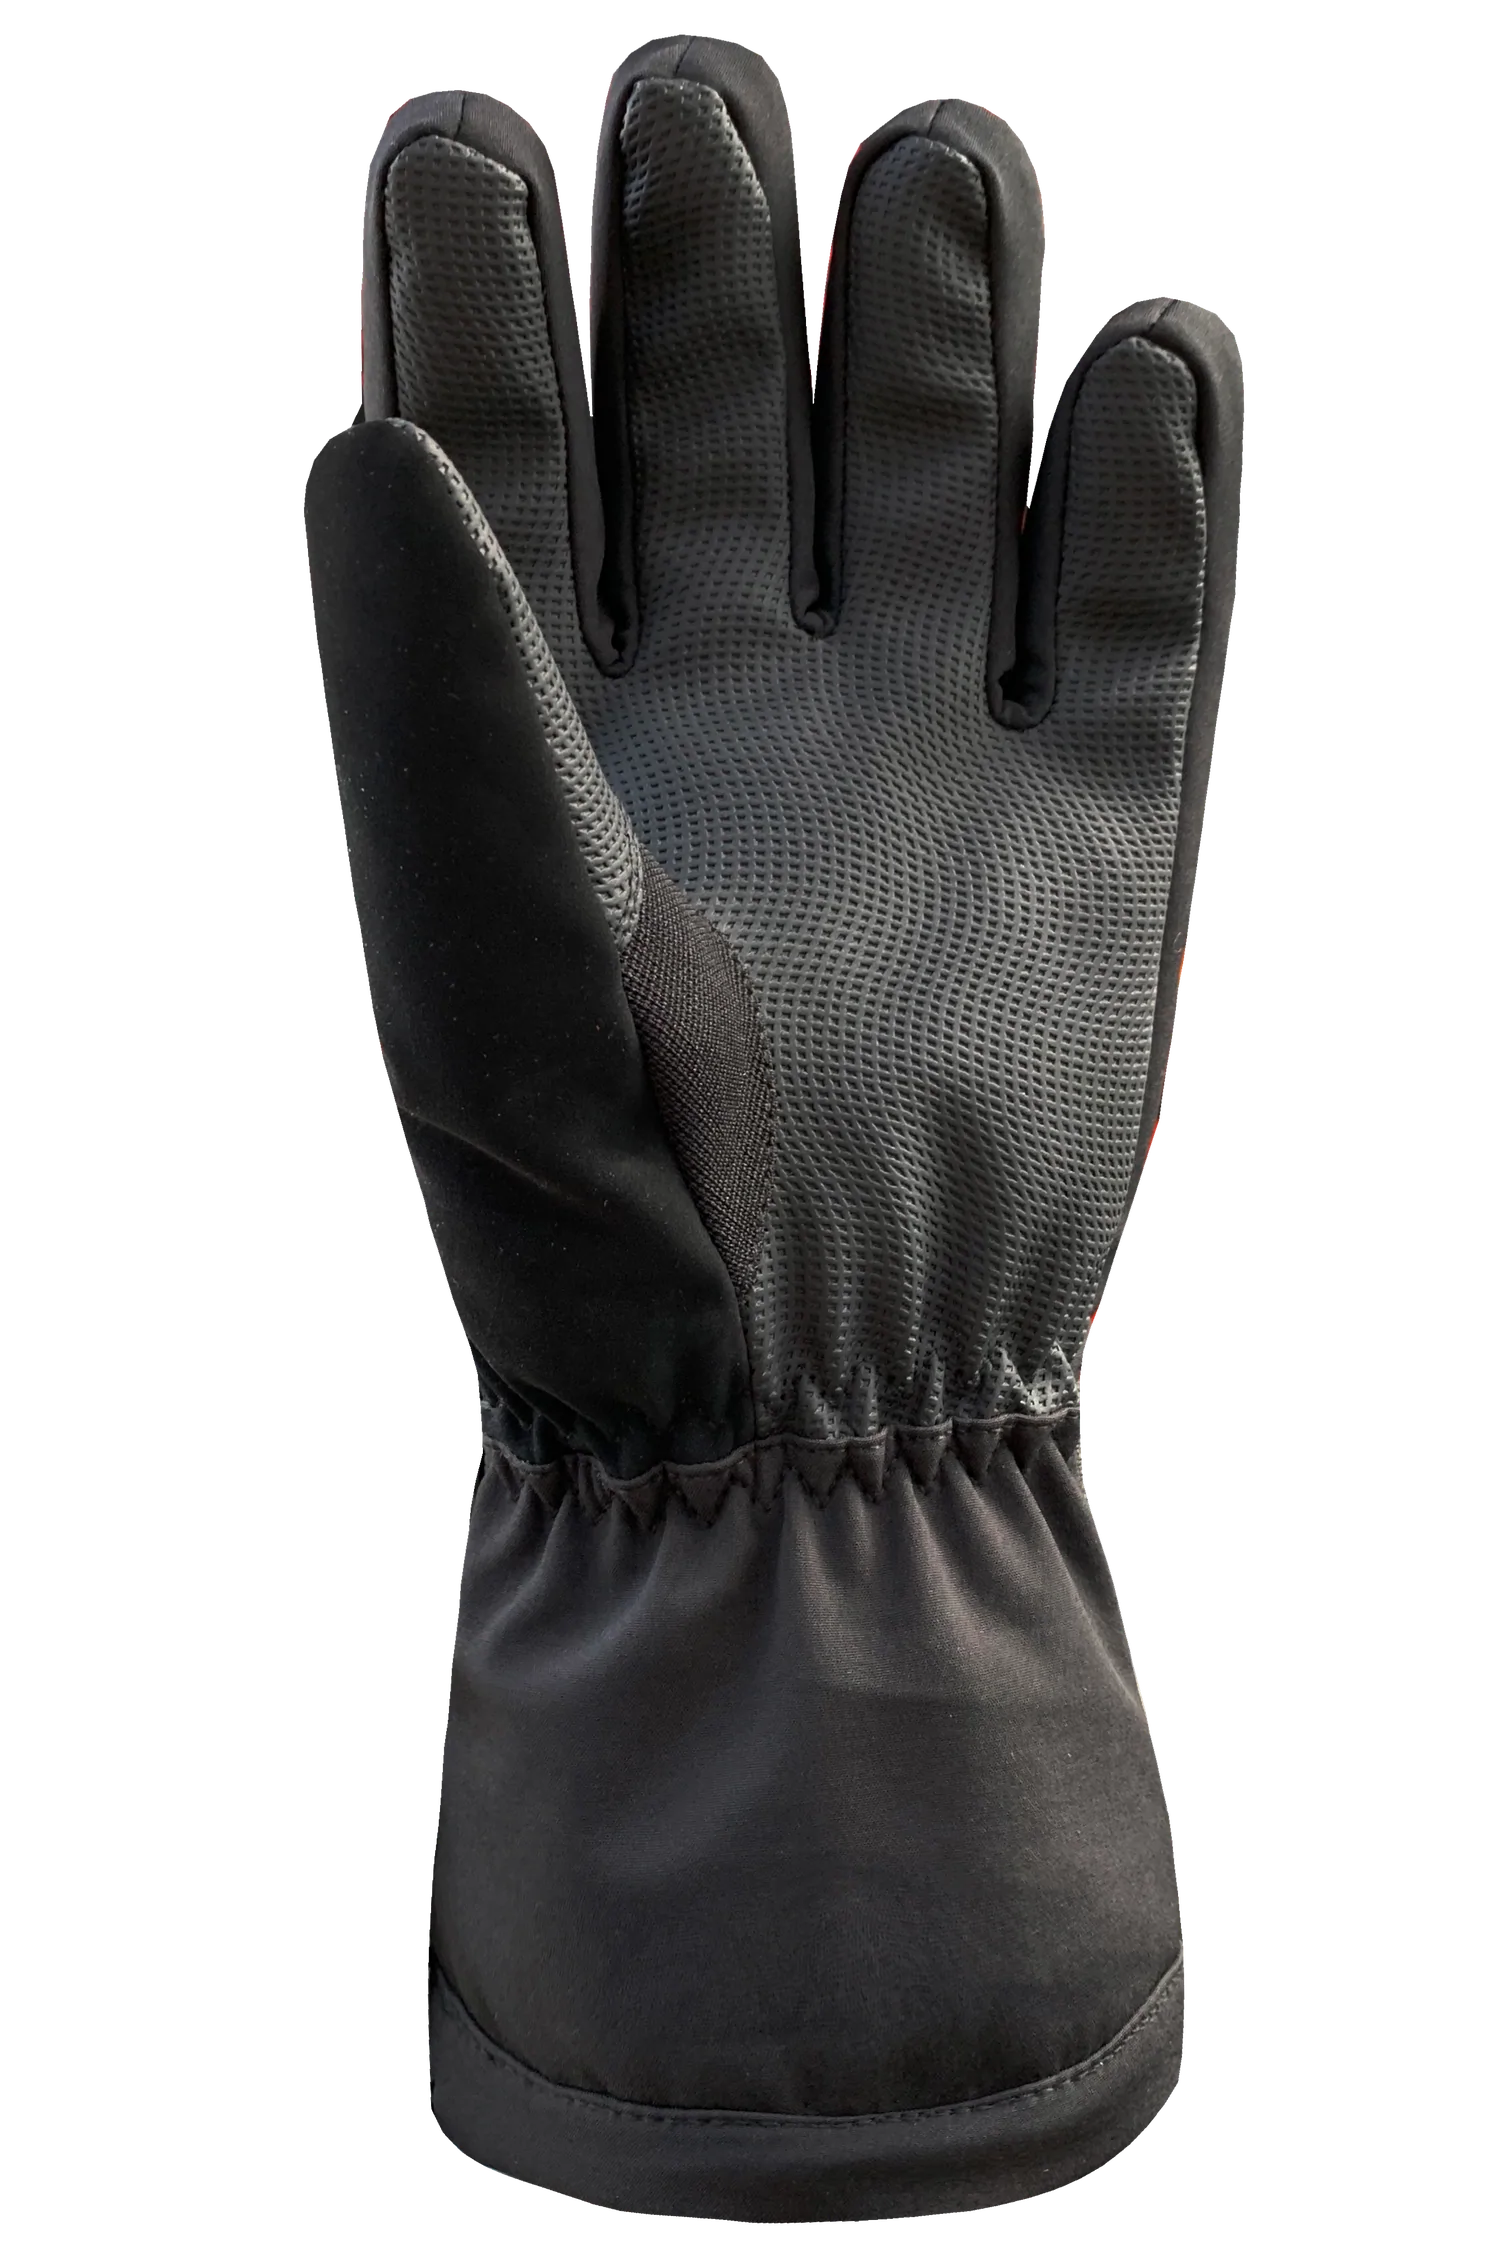 Auclair Women's Softee 3 Gloves